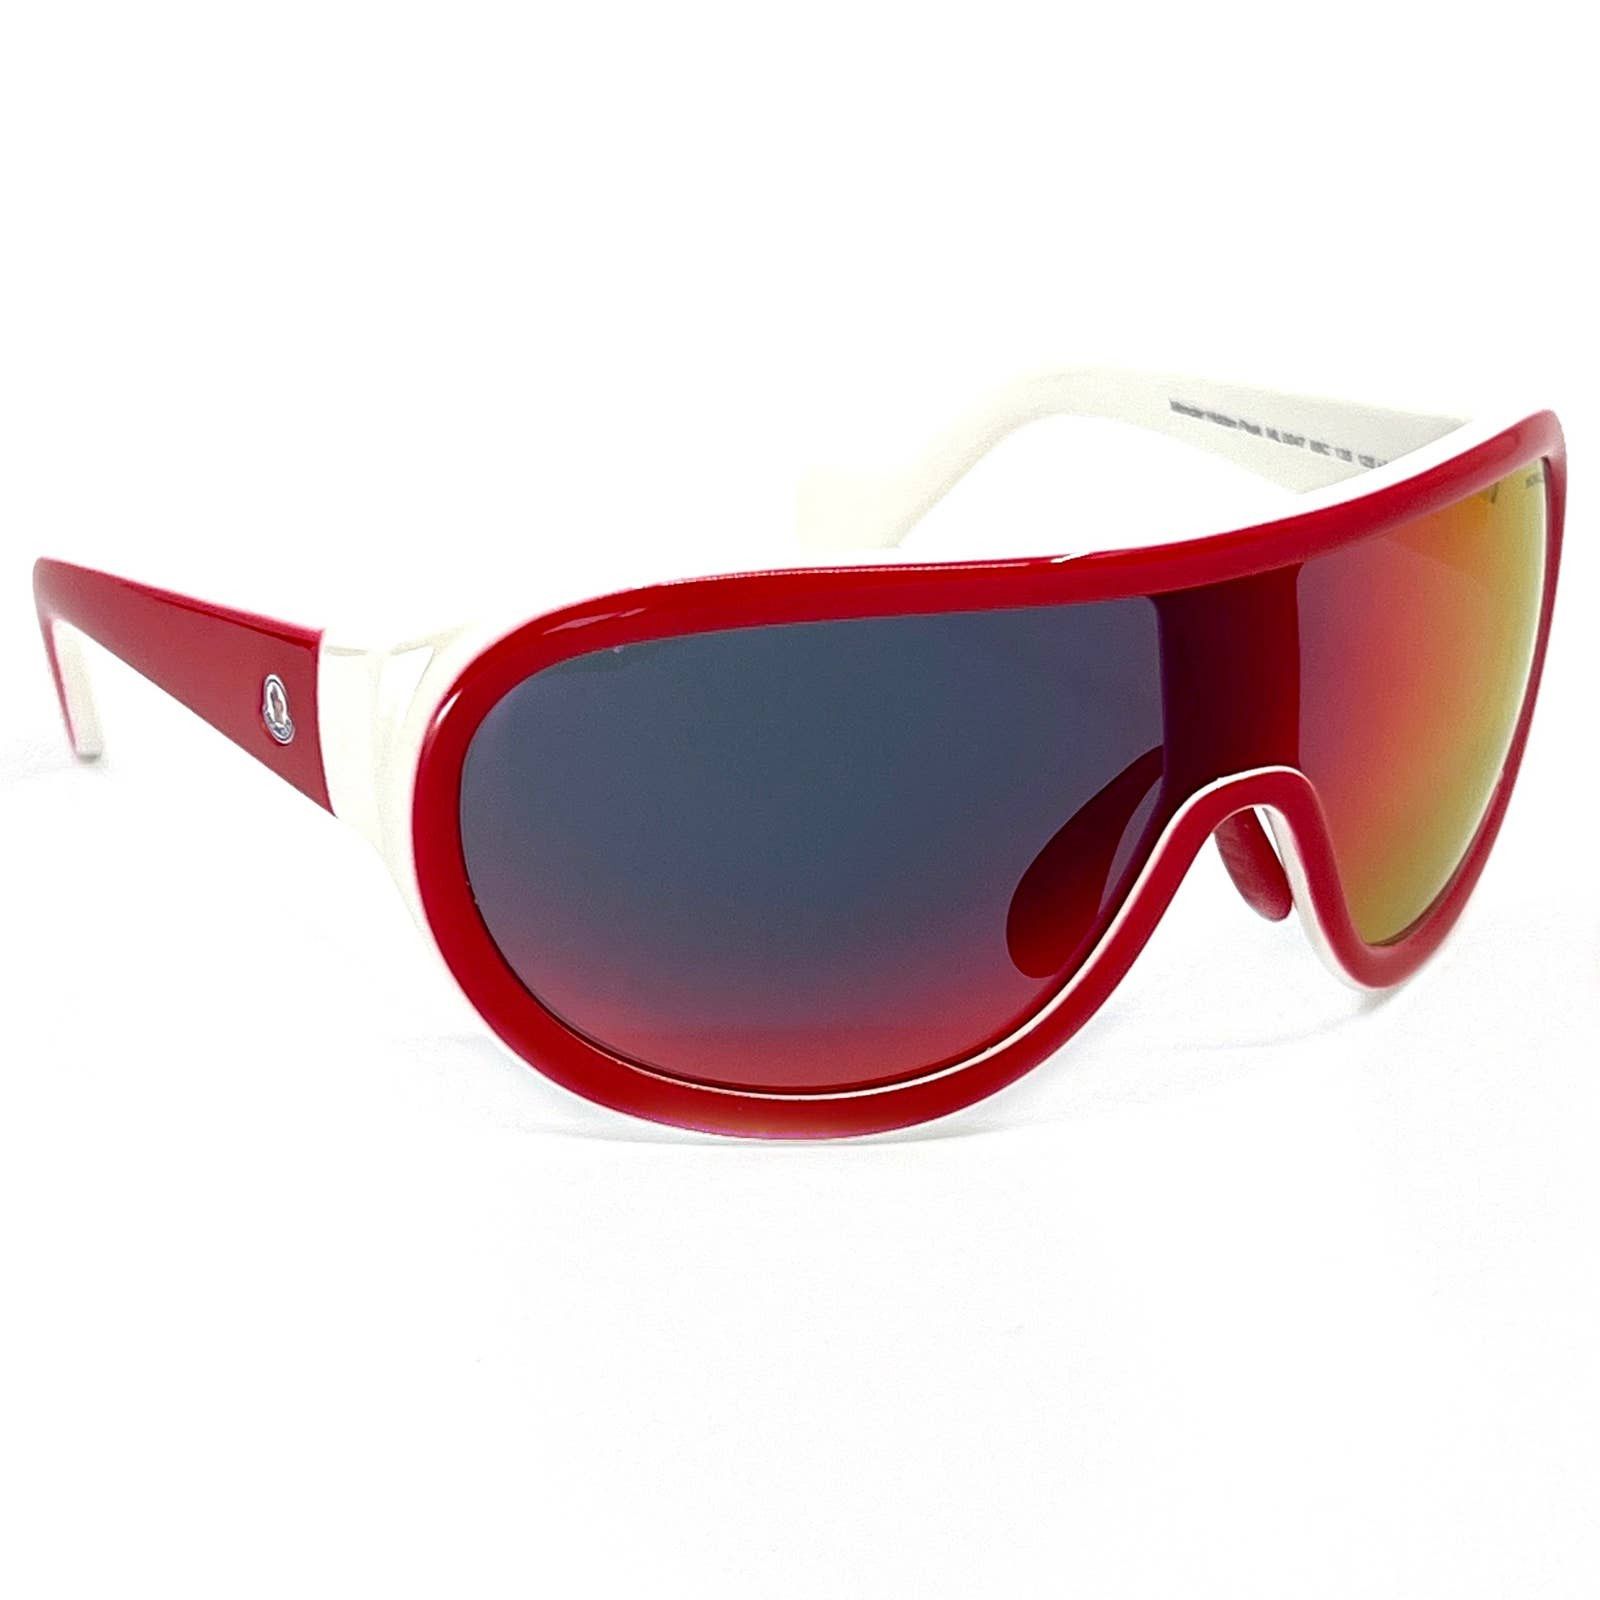 New! MONCLER Lunettes Ski Goggles ML0130/S 02C, Authentic